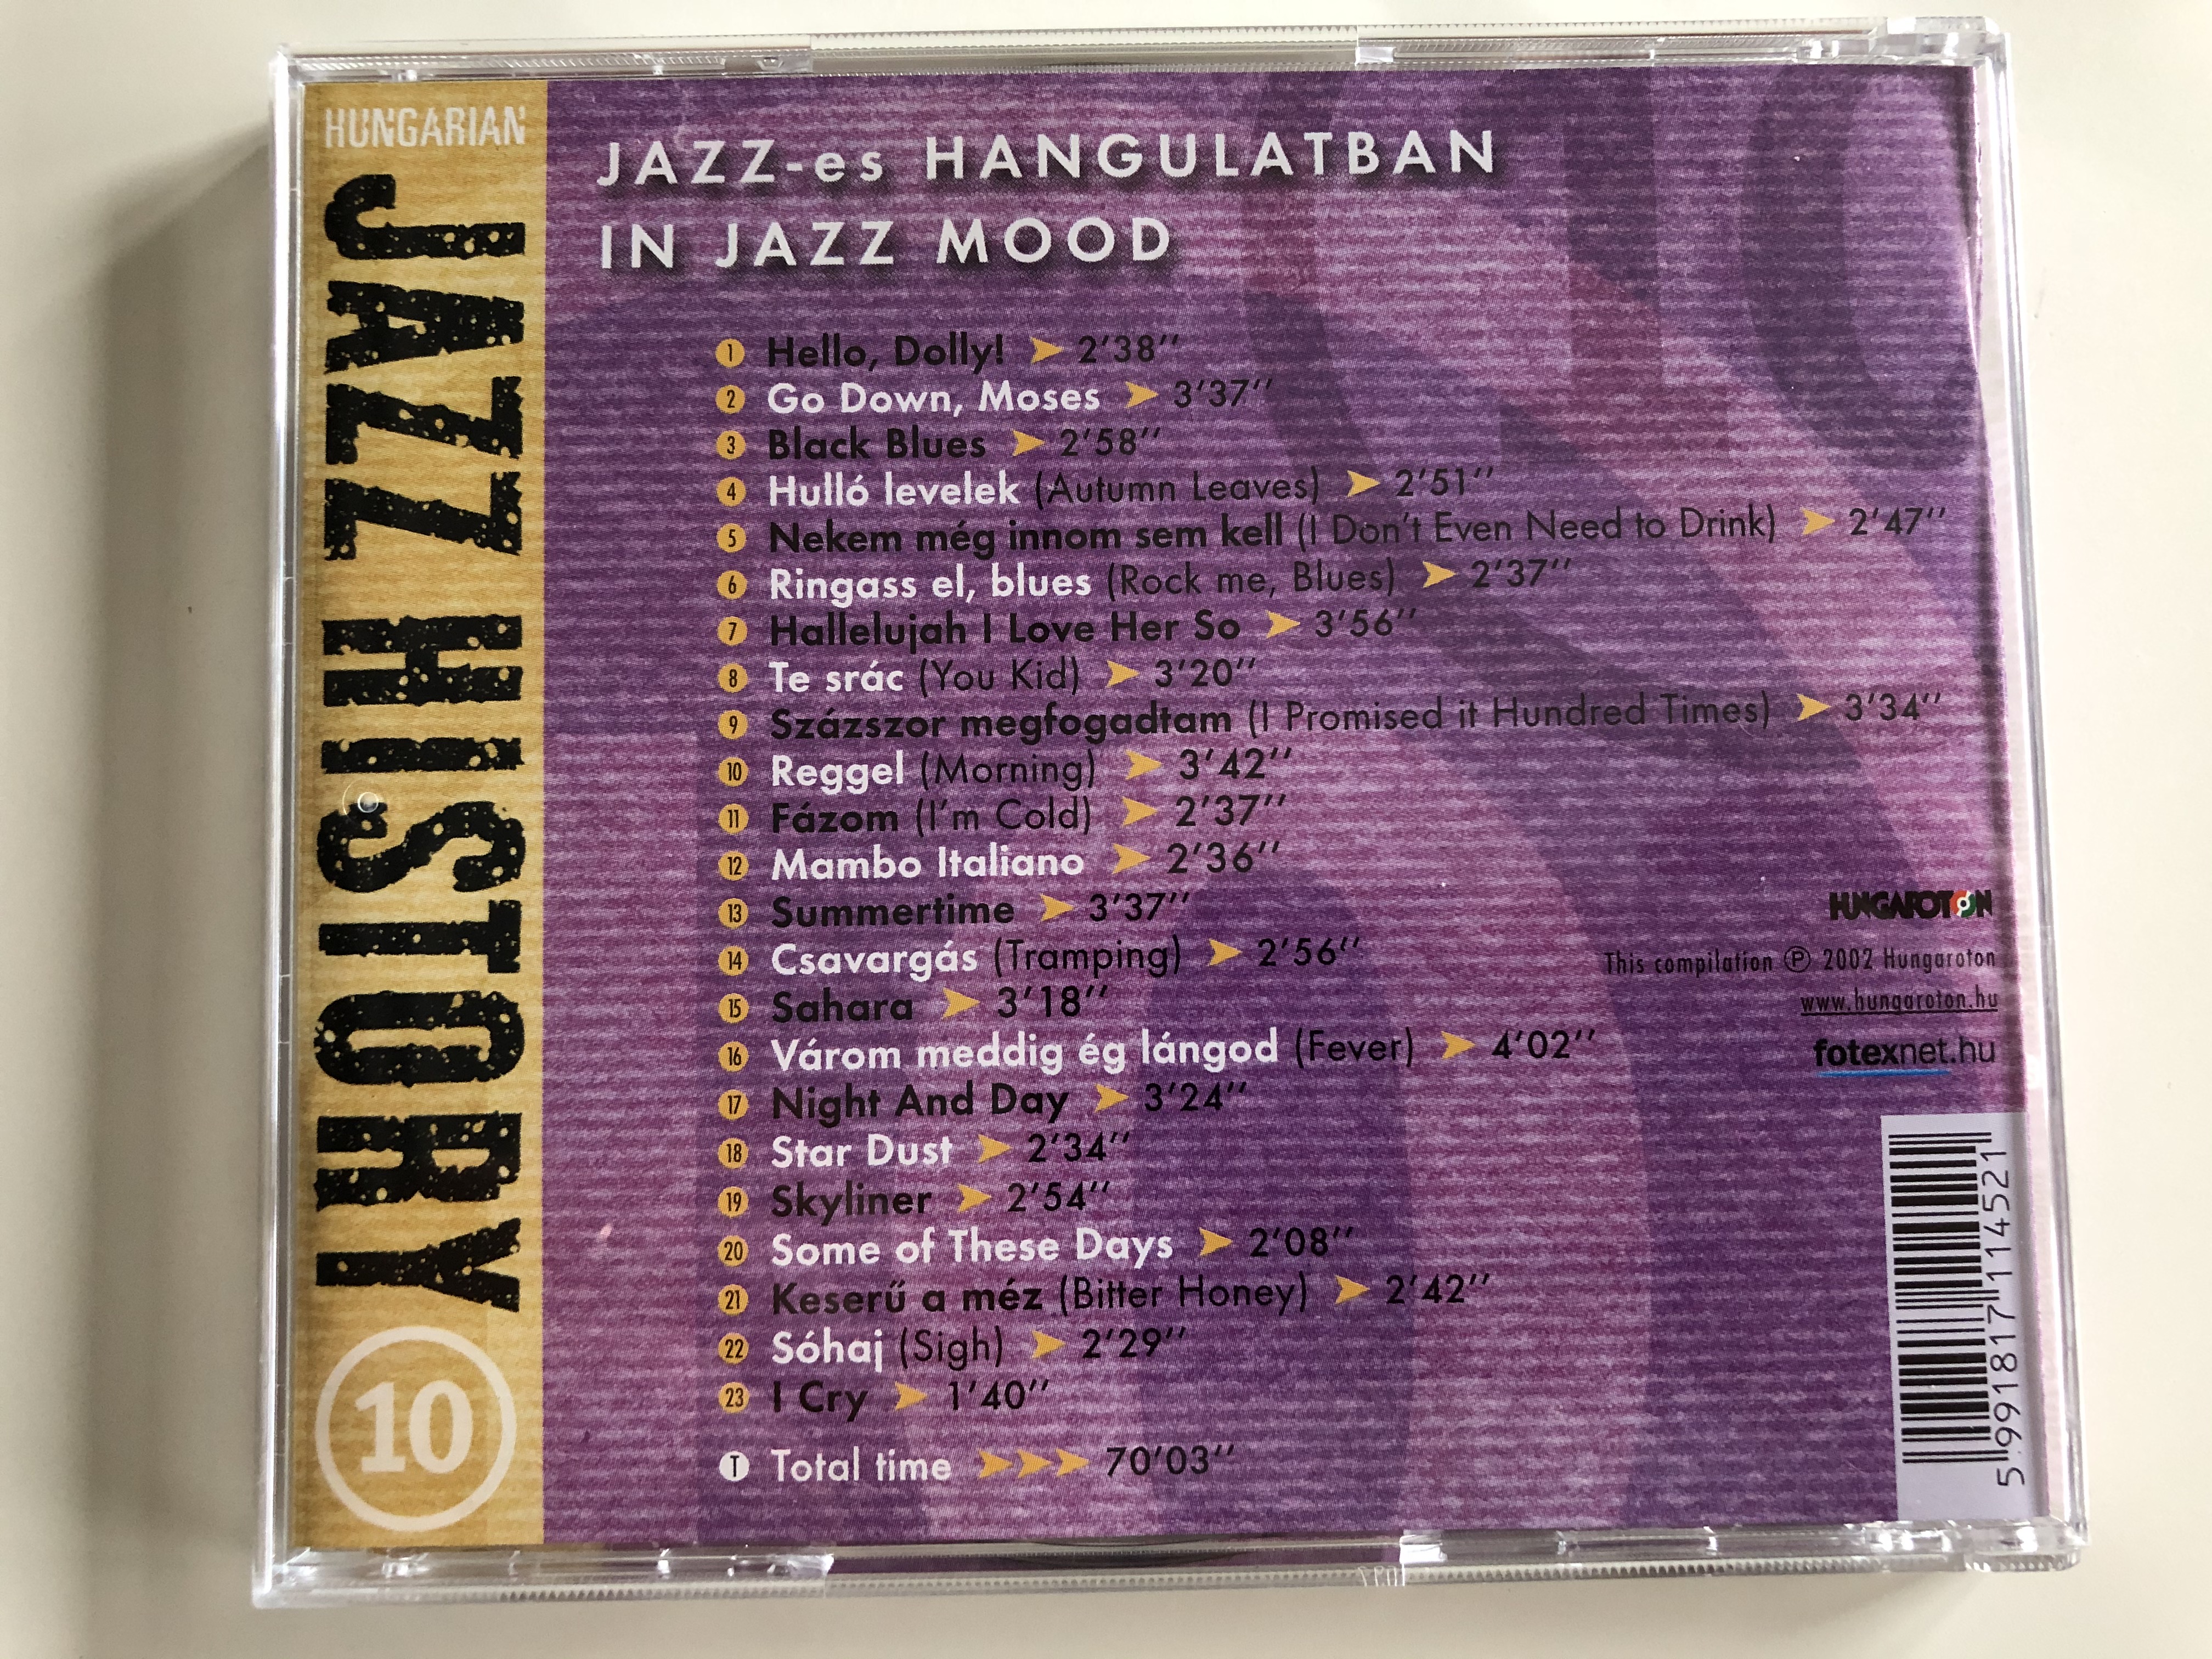 jazz-es-hangulatban-in-jazz-mood-hungarian-jazz-history-10-hungaroton-audio-cd-2002-hcd-71145-8-.jpg